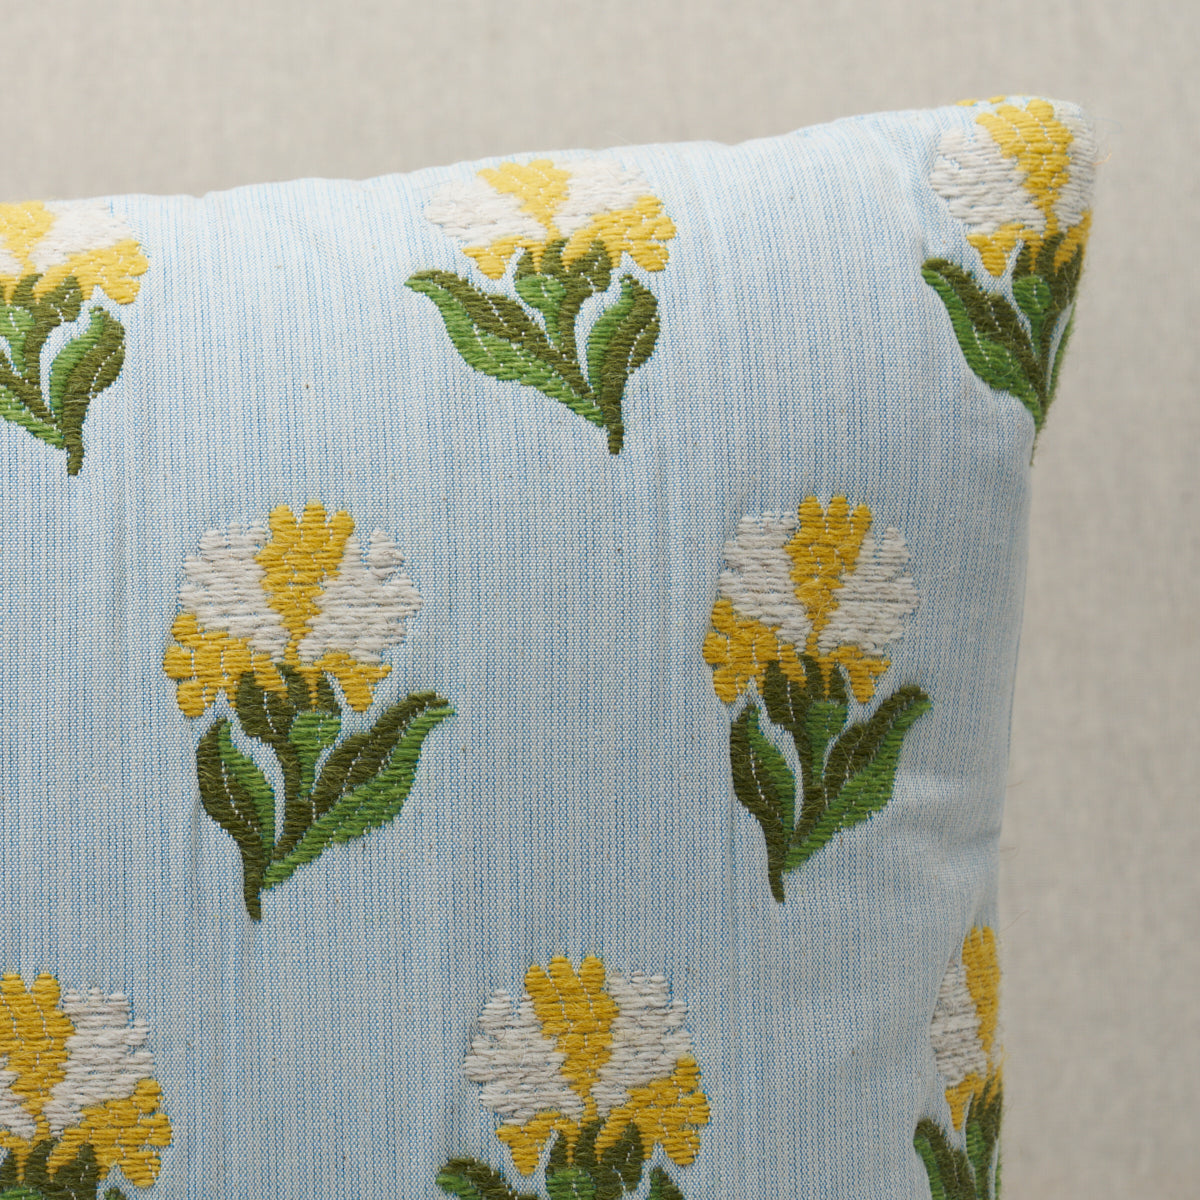 Rosina Floral Pillow | Marigold